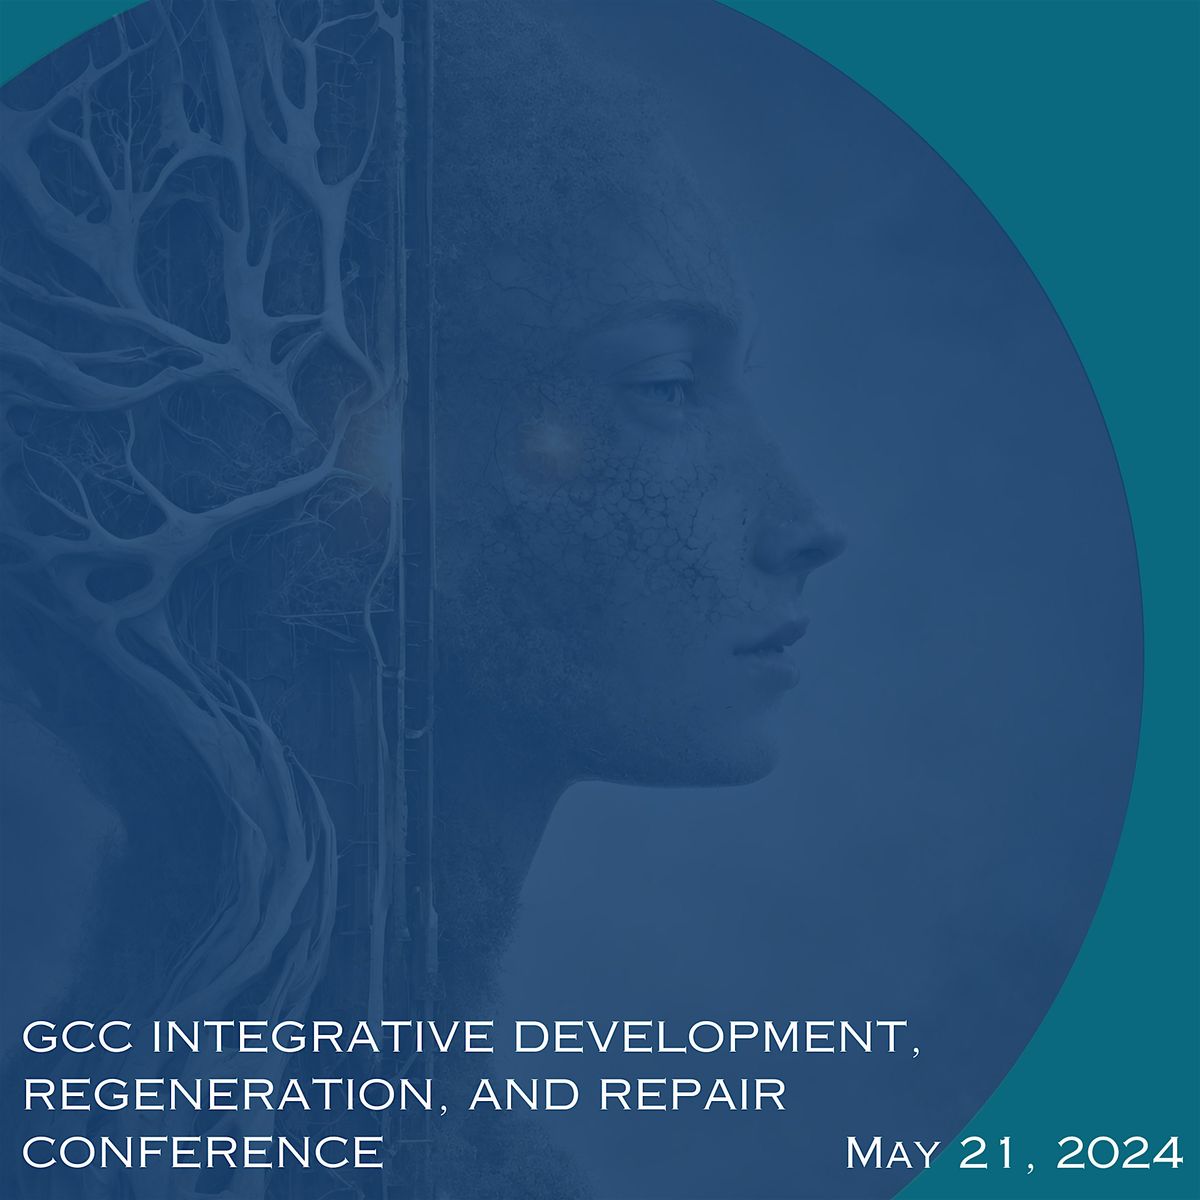 GCC Integrative Development, Regeneration, and Repair Conference